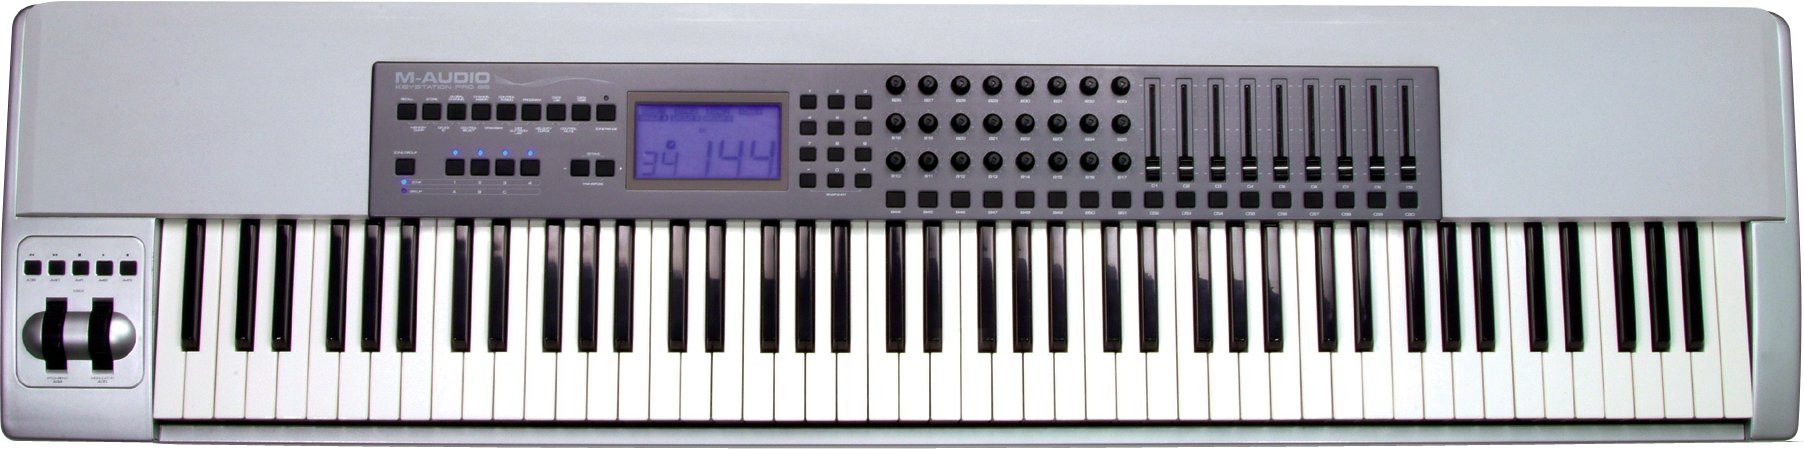 M Audio Keystation 88 Pro Midi Controller/Keyboard